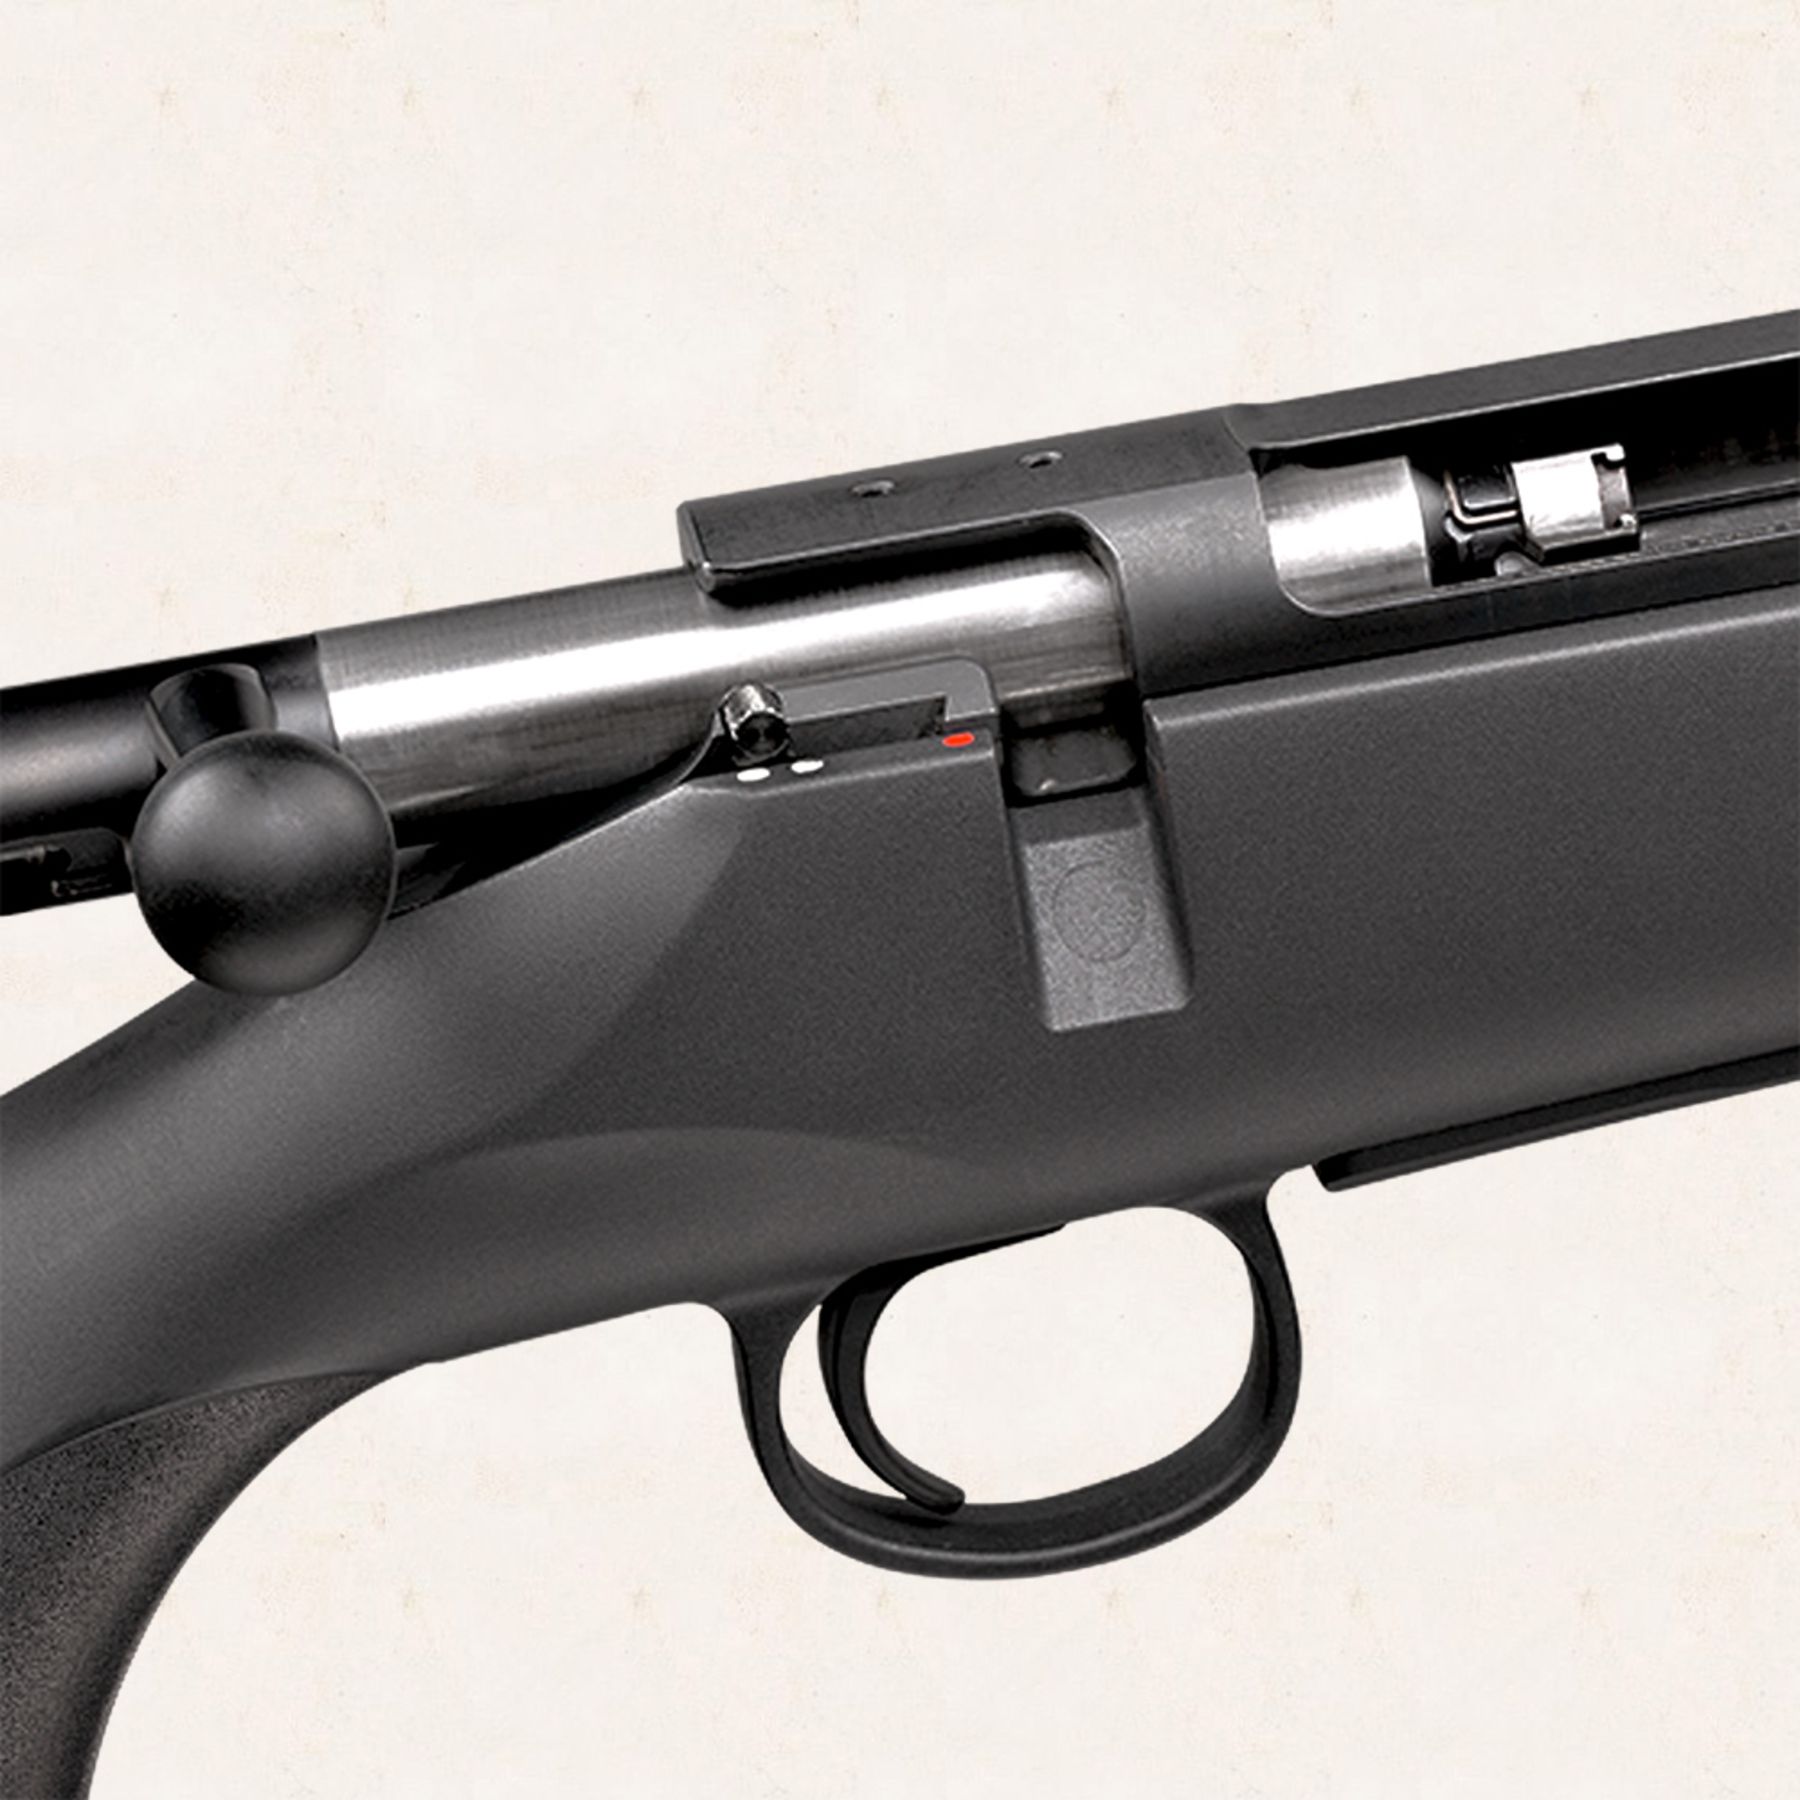 Mauser carabina bolt action mod. M18 cal. 300 Win. Mag.